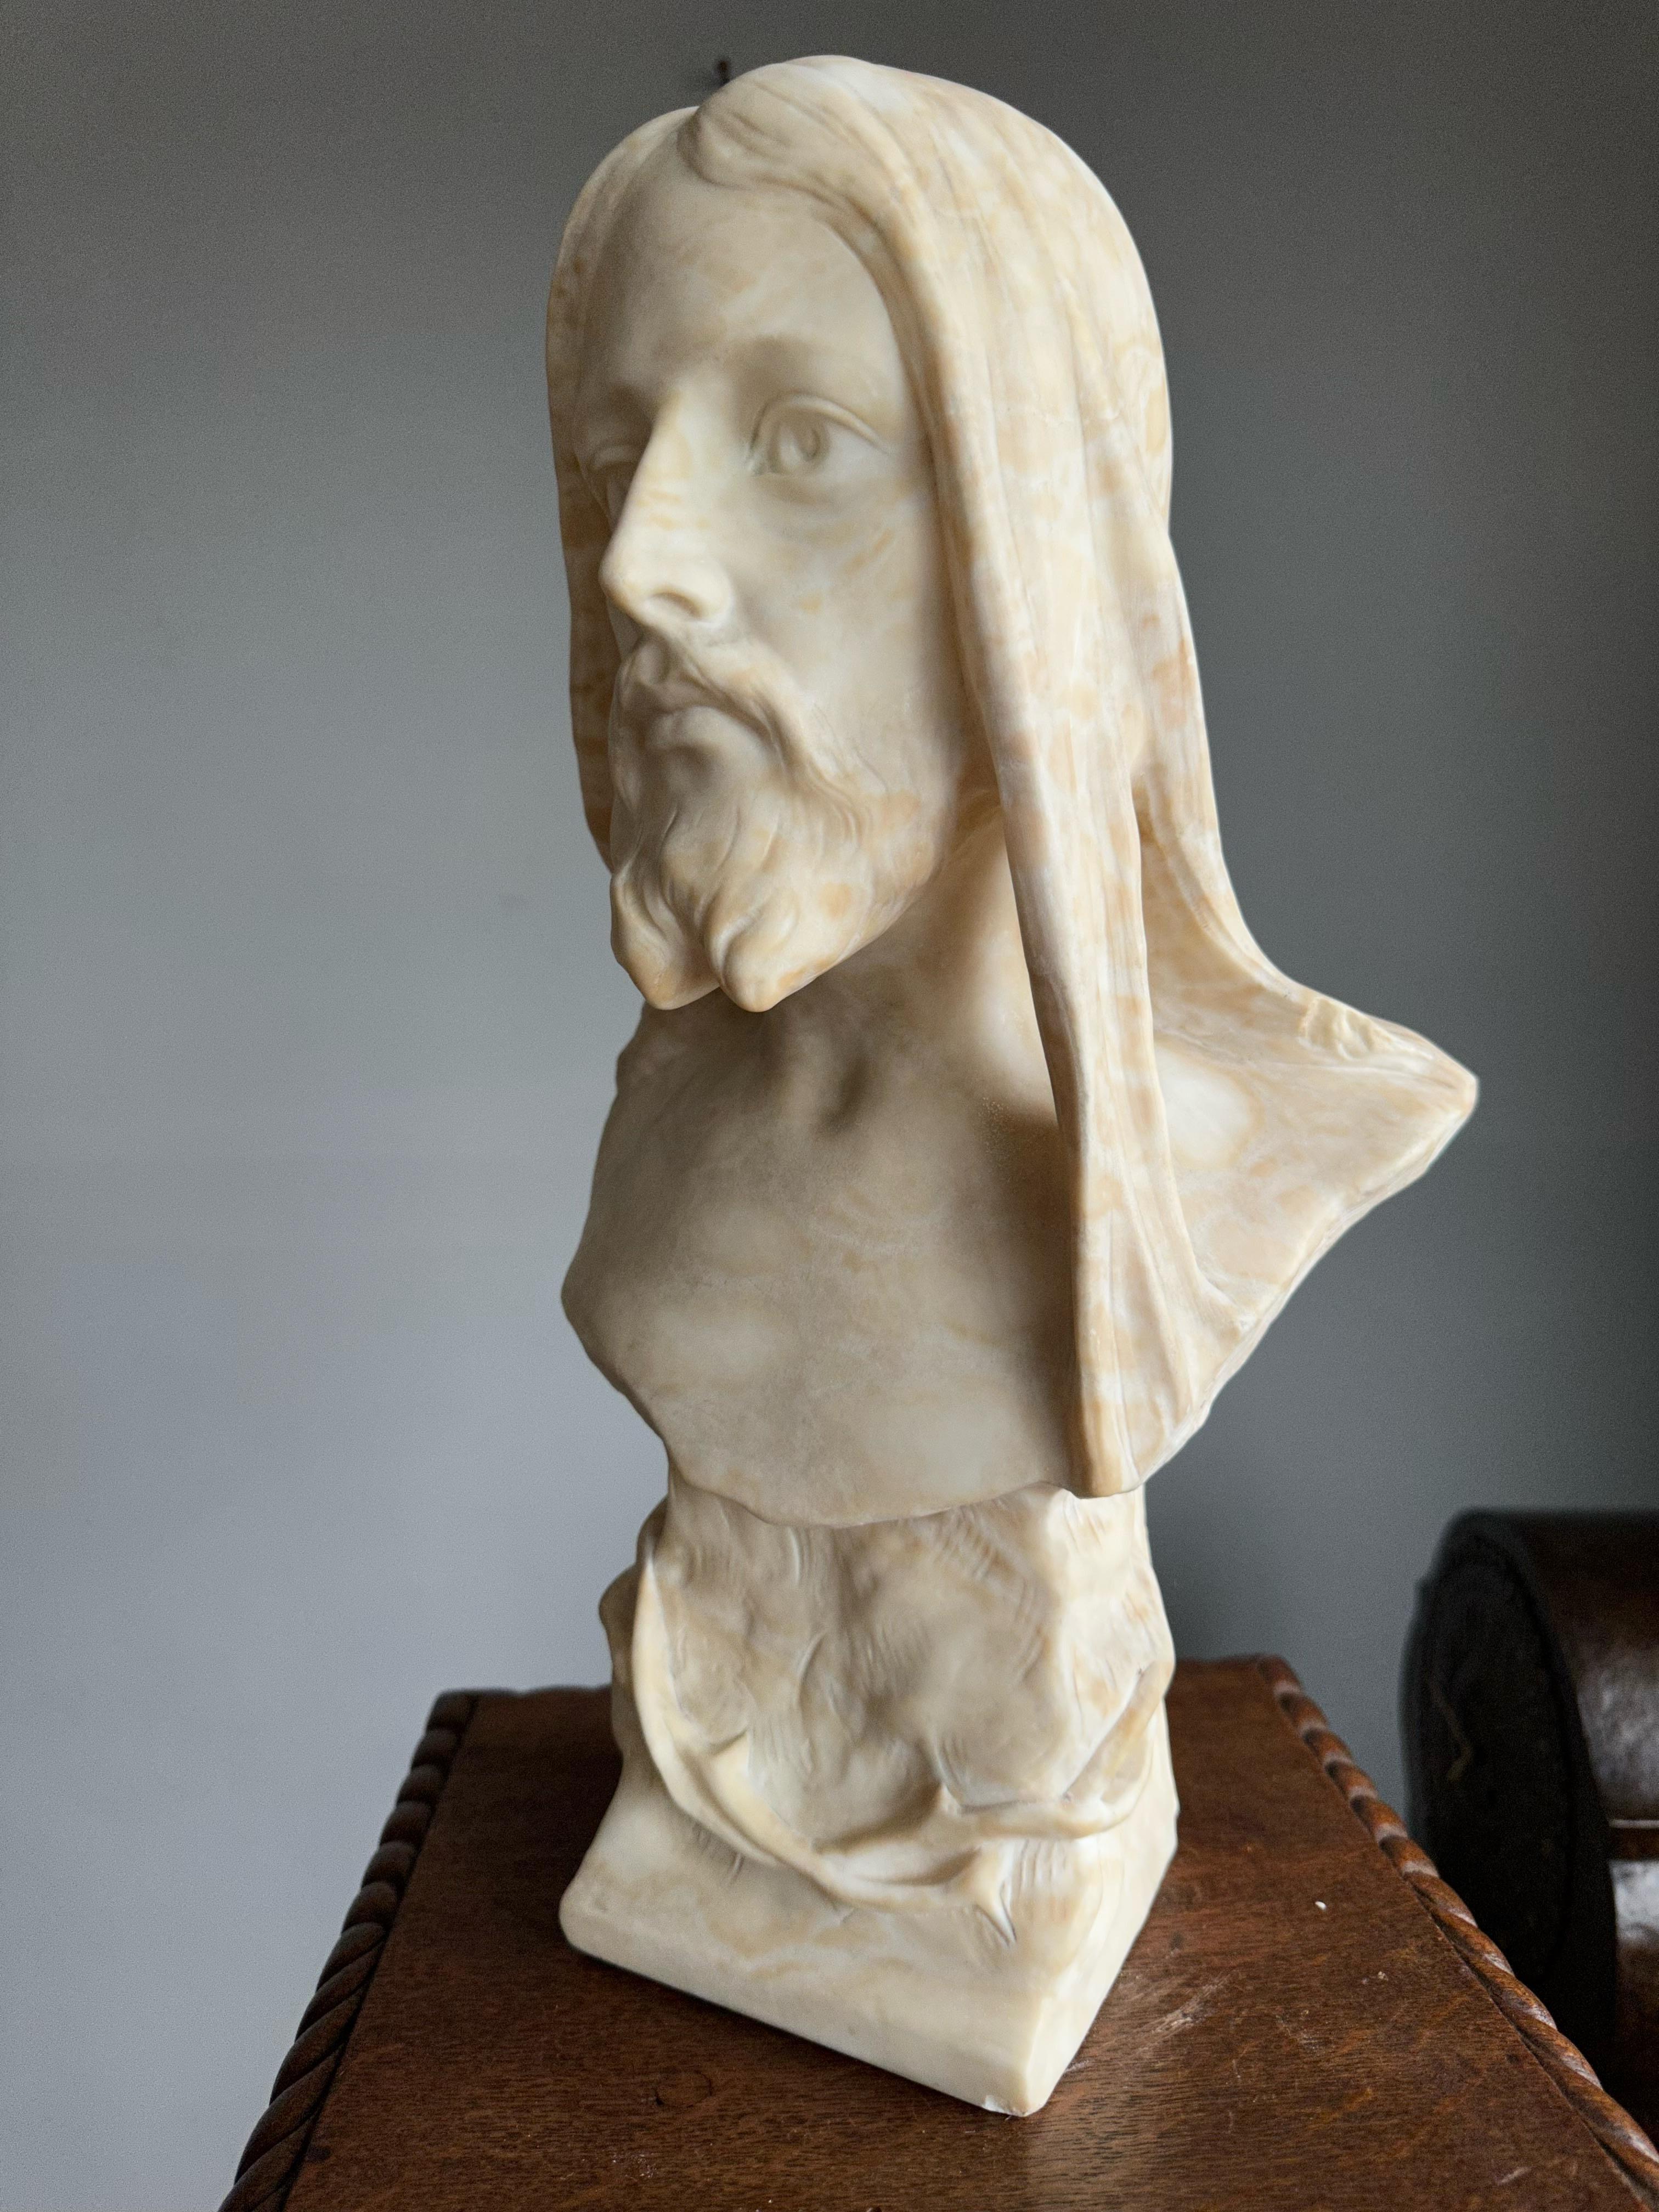 Antique, Early 1900 Large Hand Carved Alabaster Sculpture / Bust of Jesus Christ For Sale 8